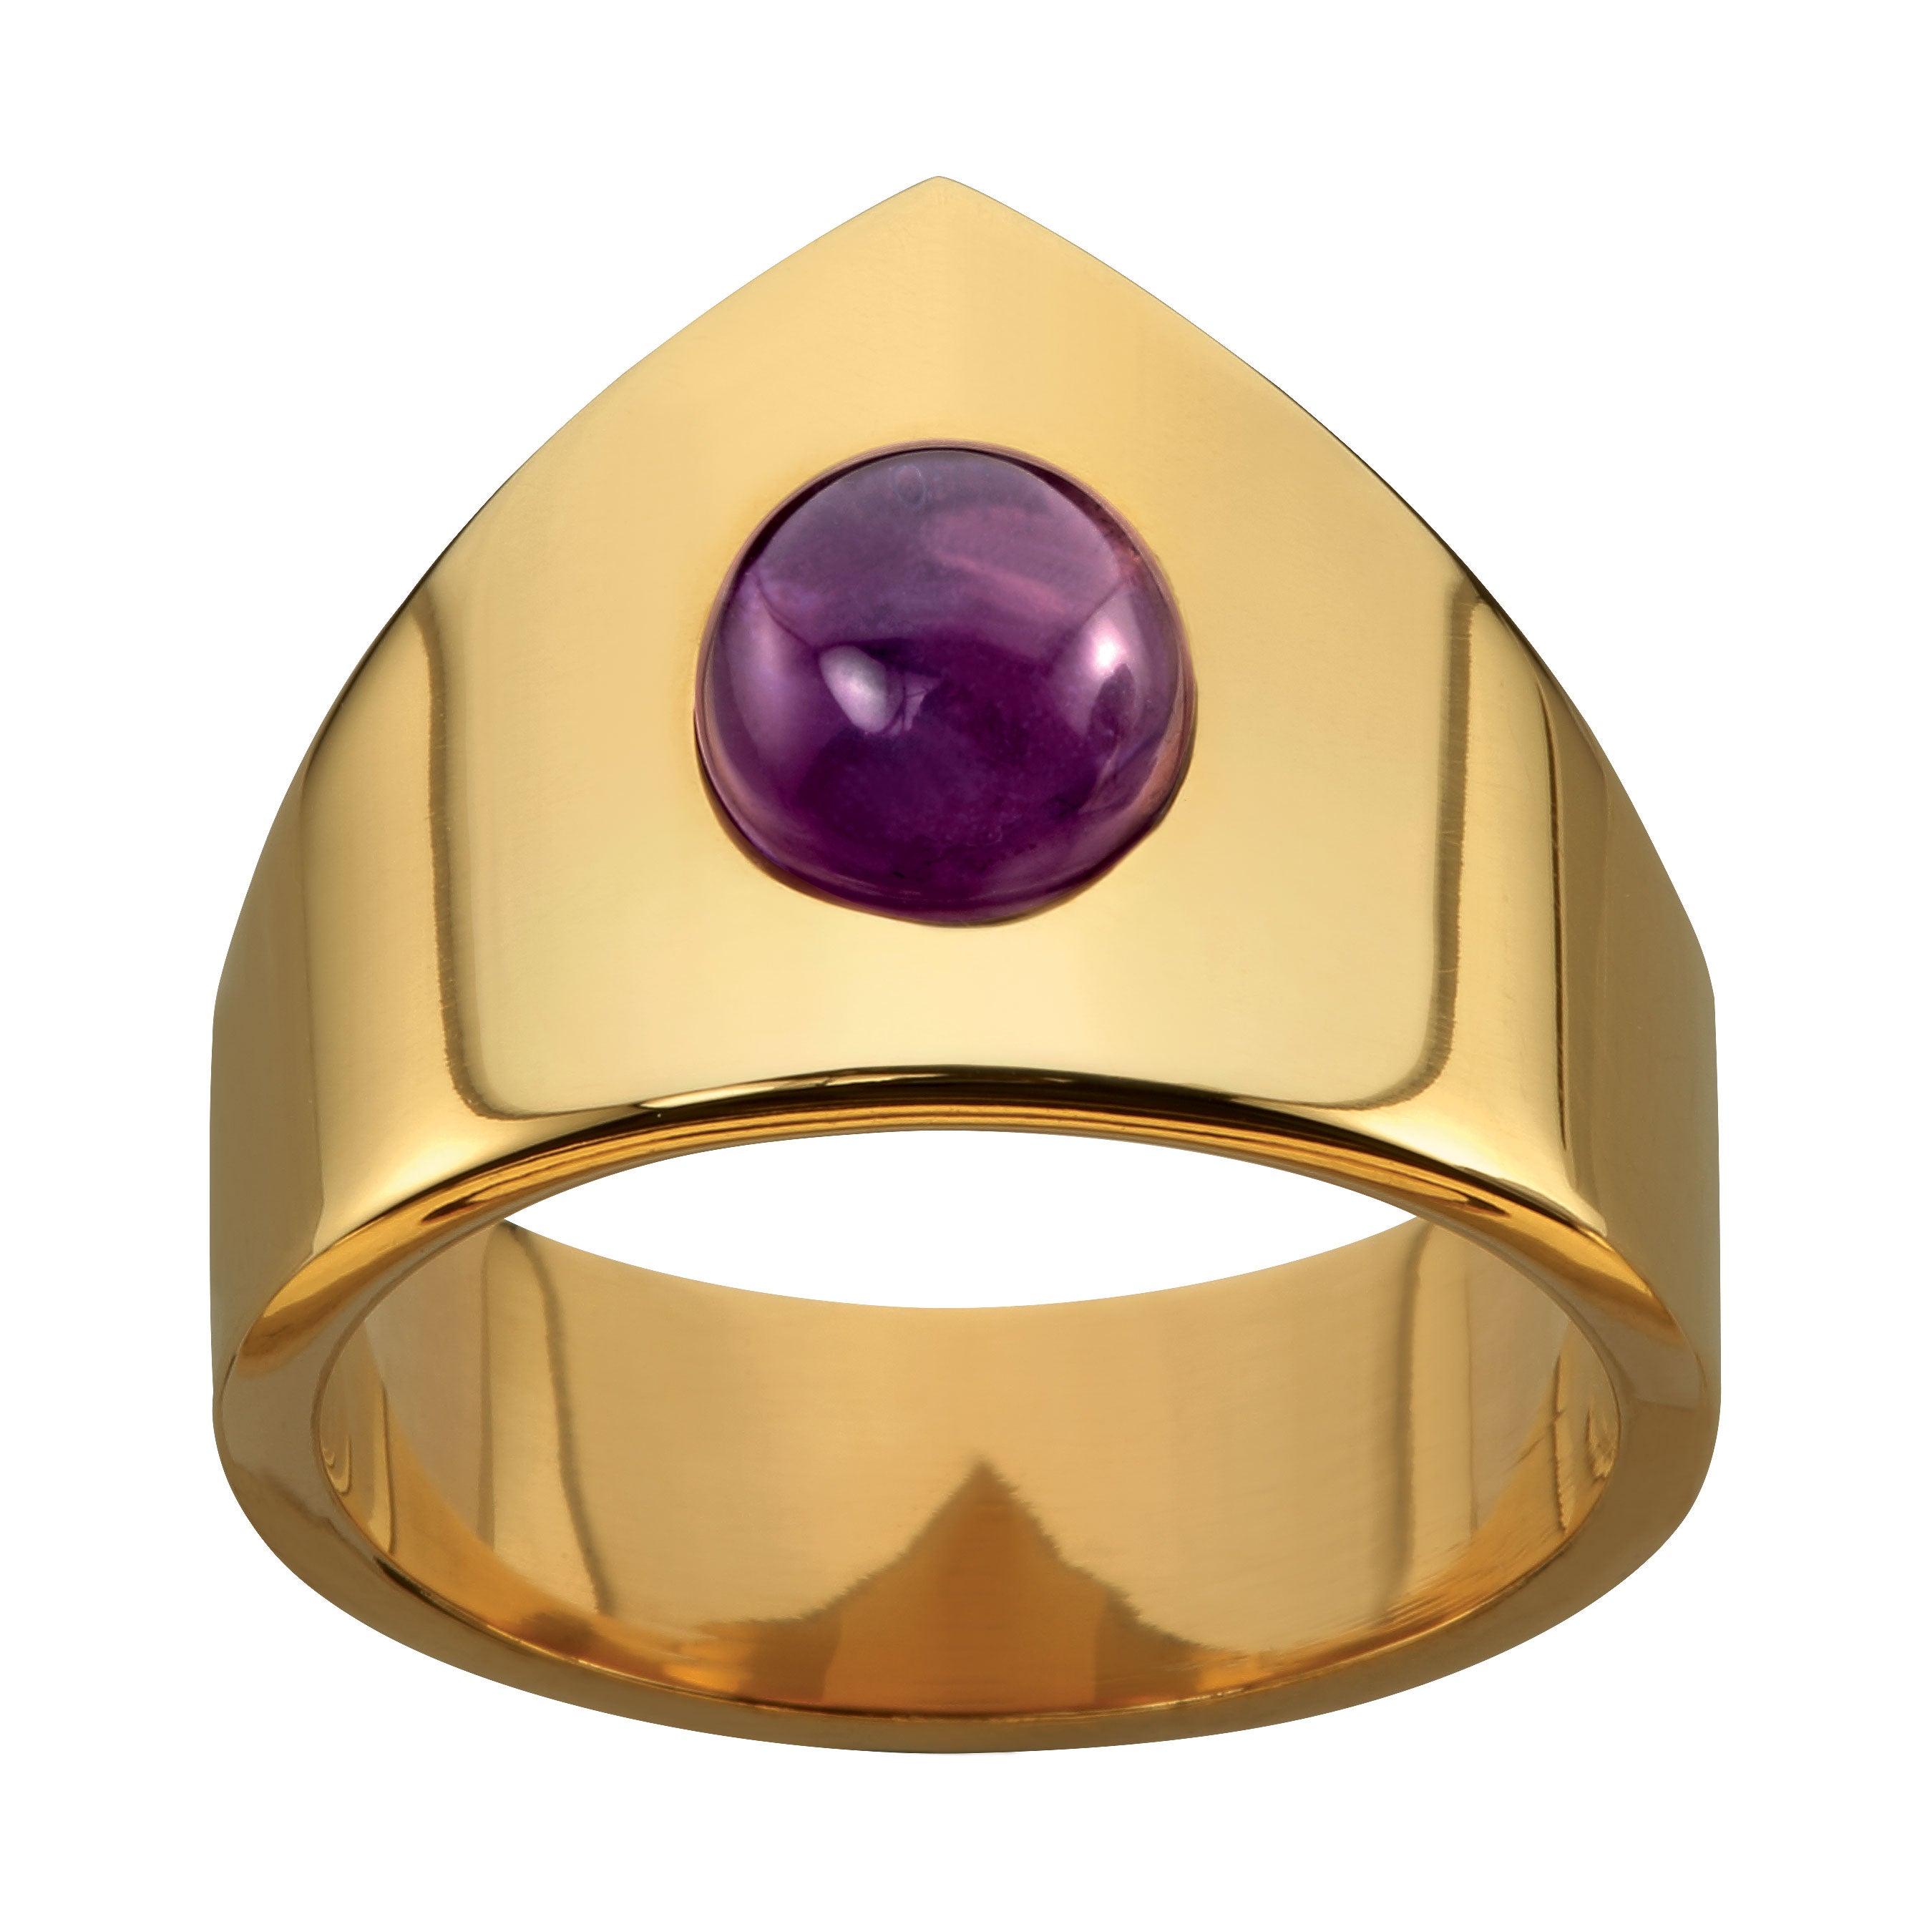 Bishop's Ring | Artistic Silver | 771